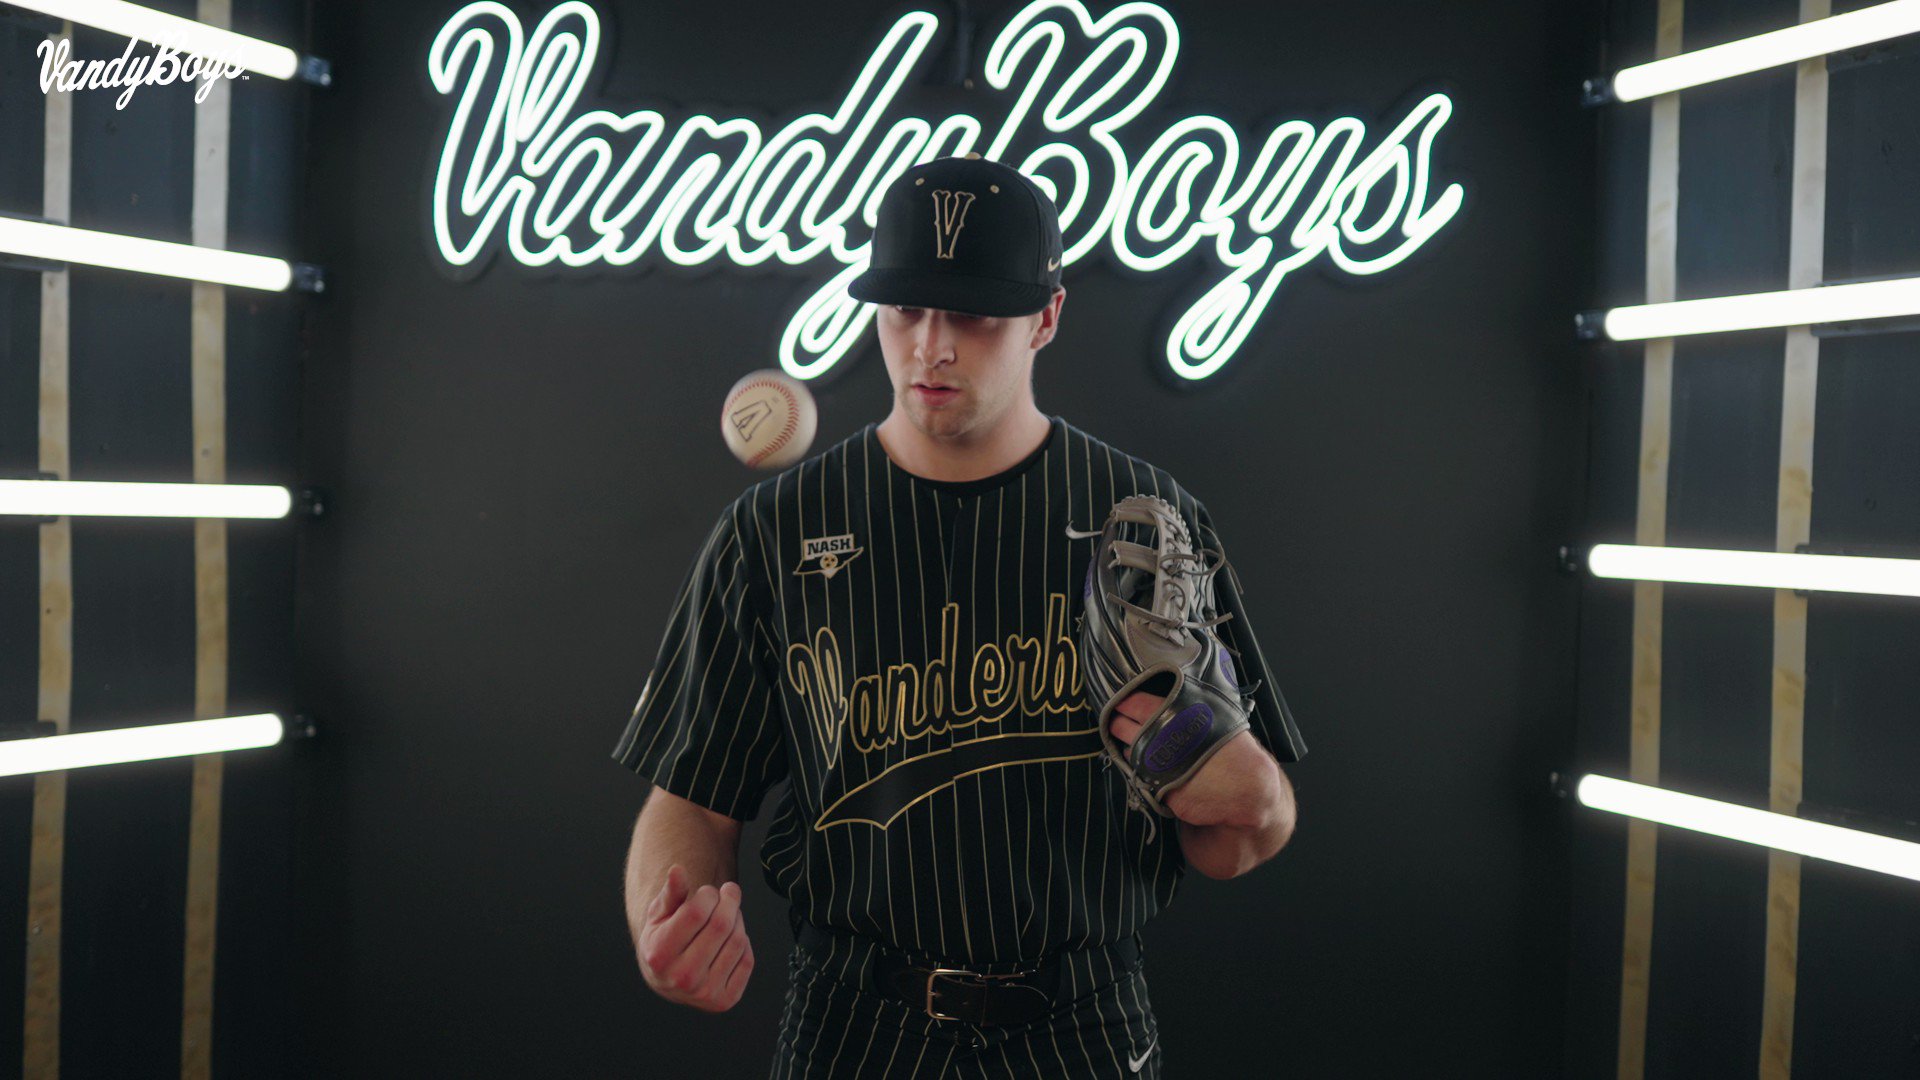 Vanderbilt Baseball on X: 𝙏𝙝𝙖𝙣𝙠 𝙮𝙤𝙪, @parkernoland20. #VandyBoys